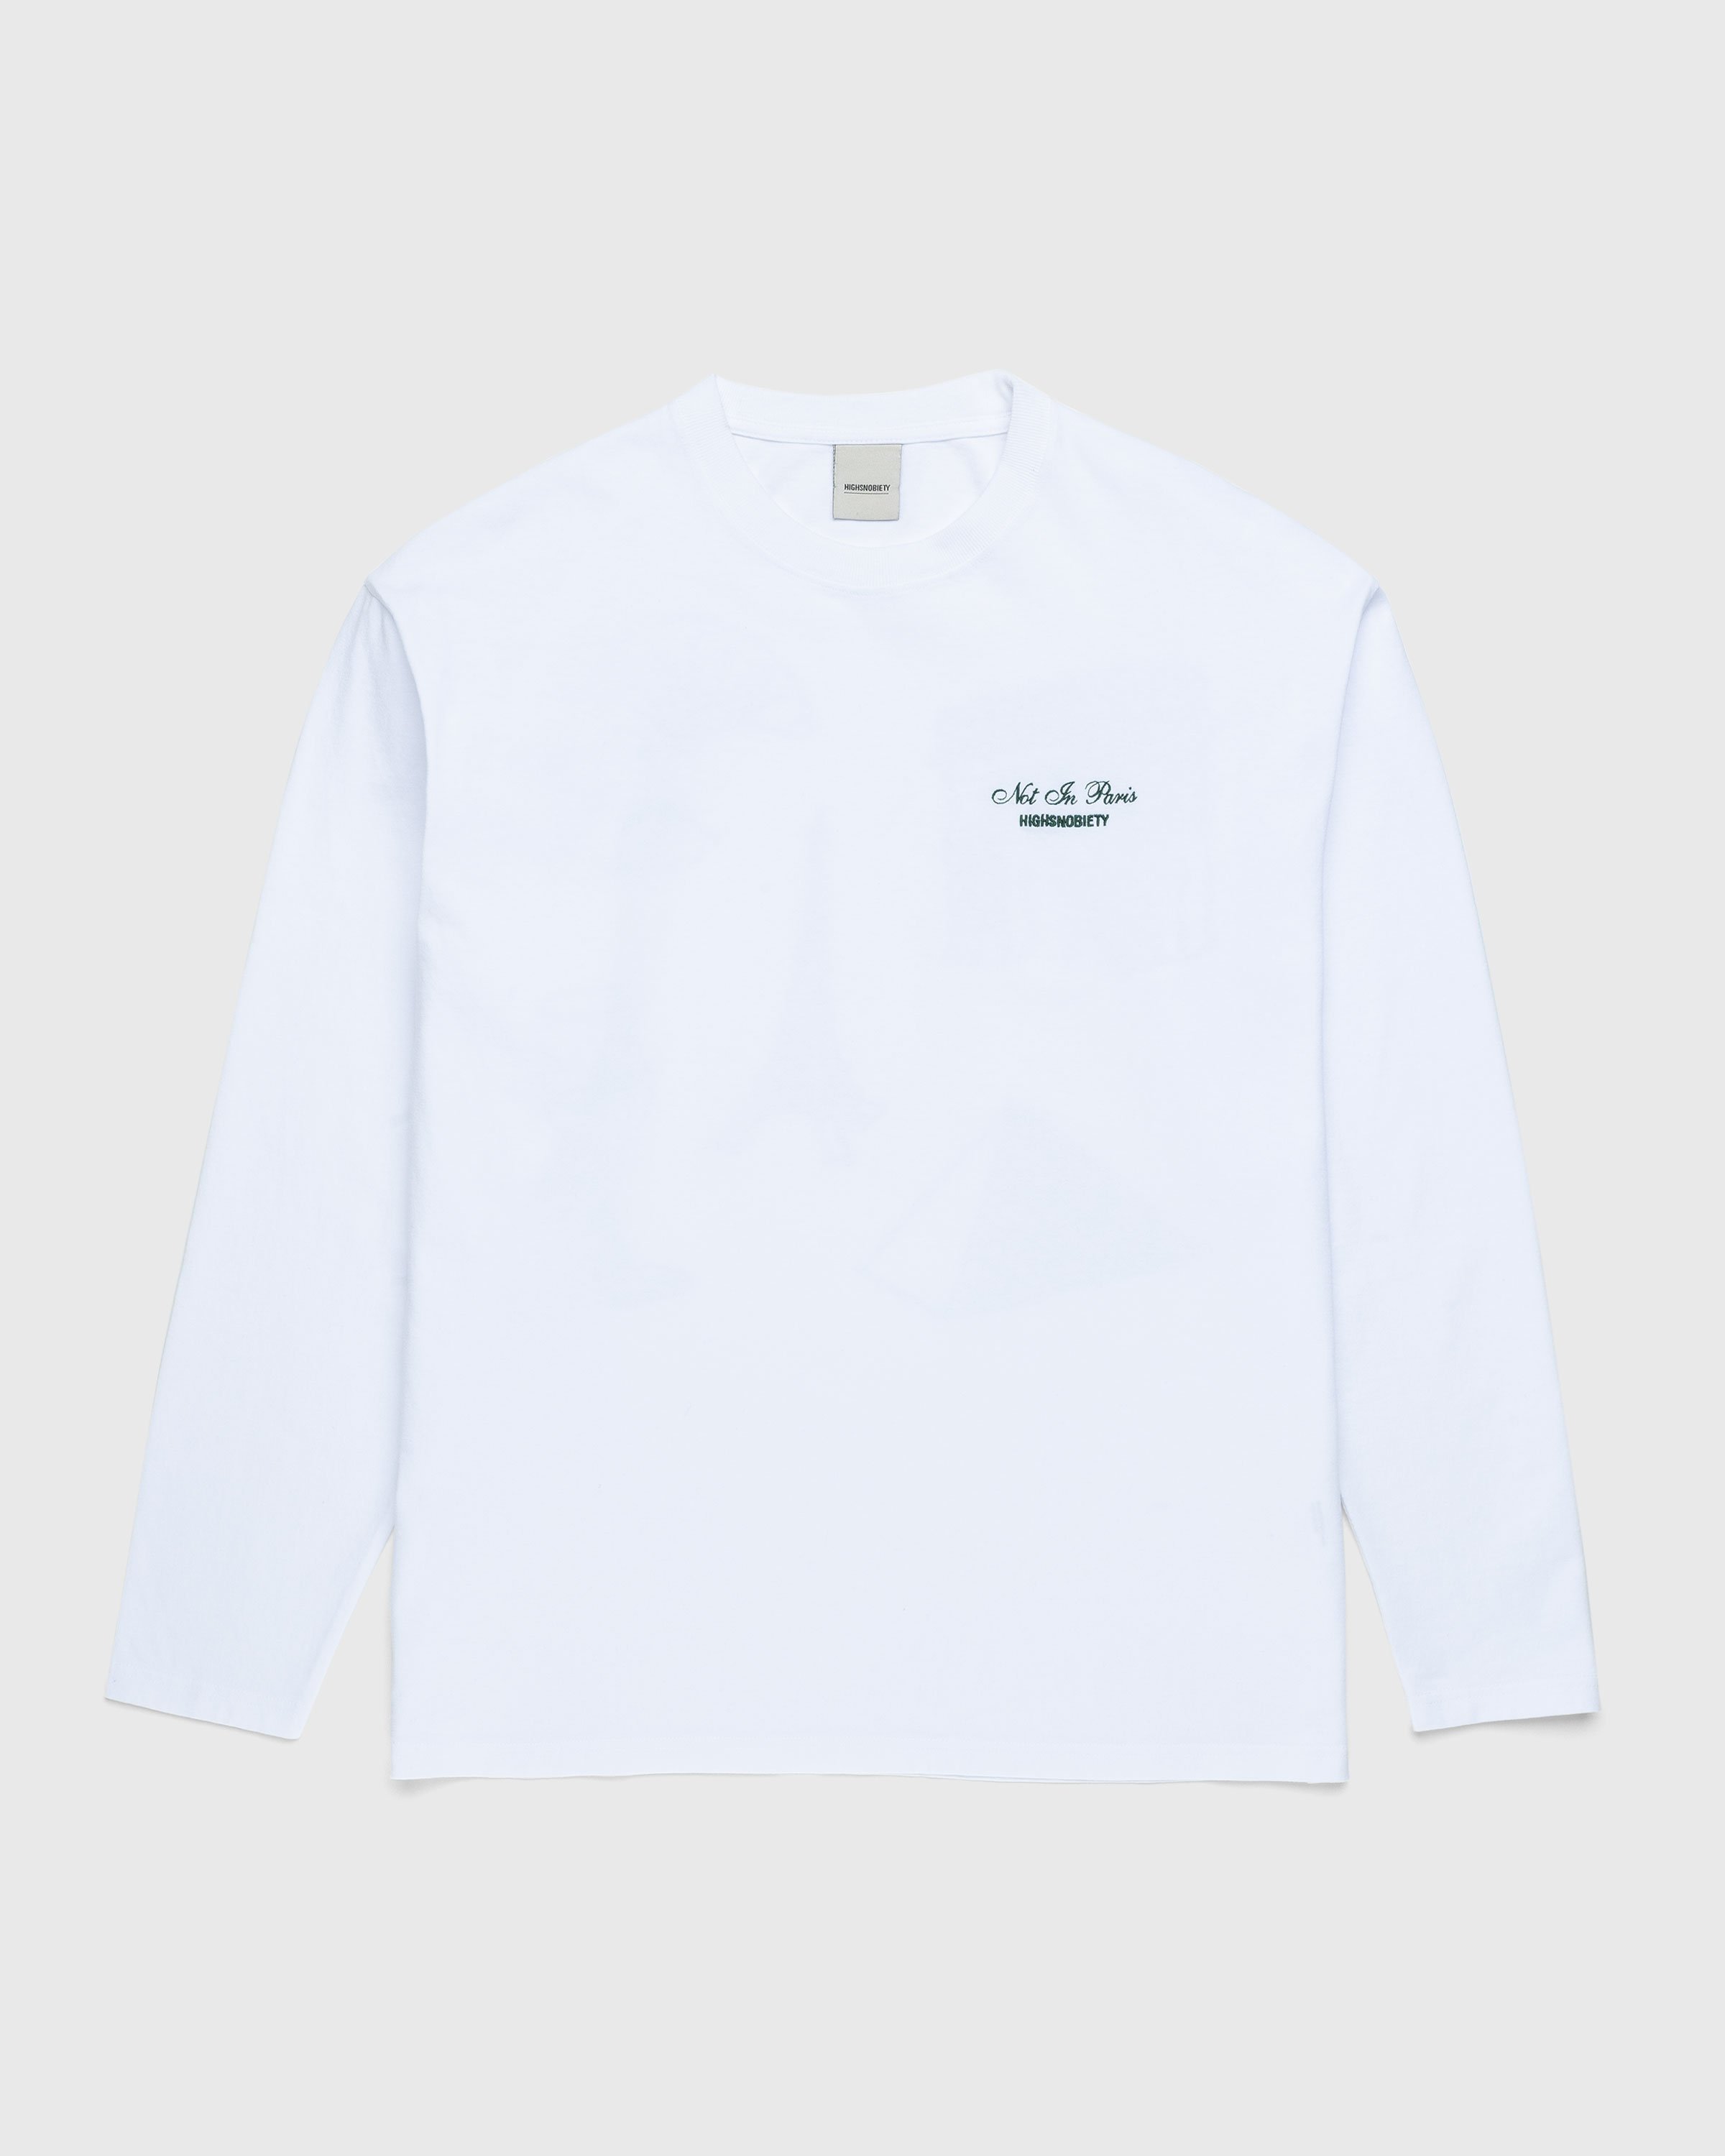 Highsnobiety - Not in Paris 5 Long Sleeve T-Shirt White - Clothing - White - Image 2